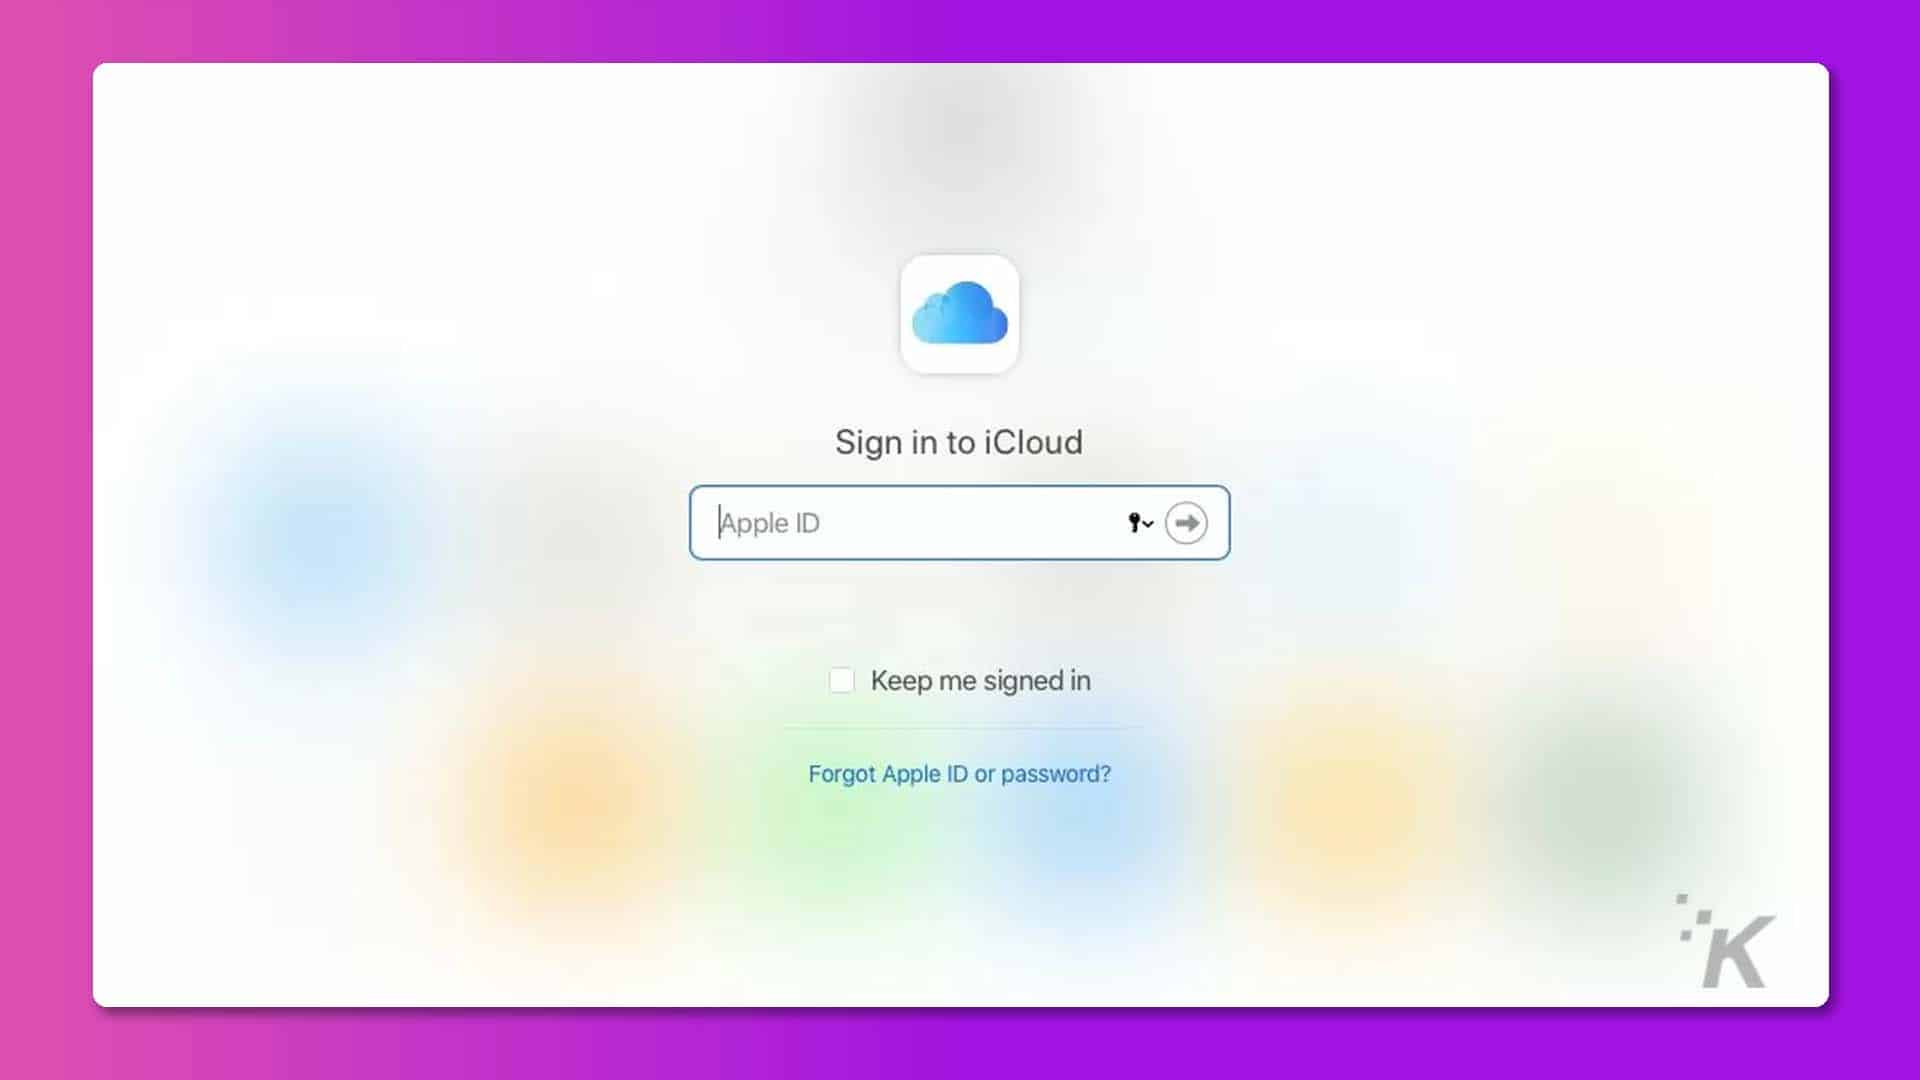 iCloud sign in screen on Mac computer.